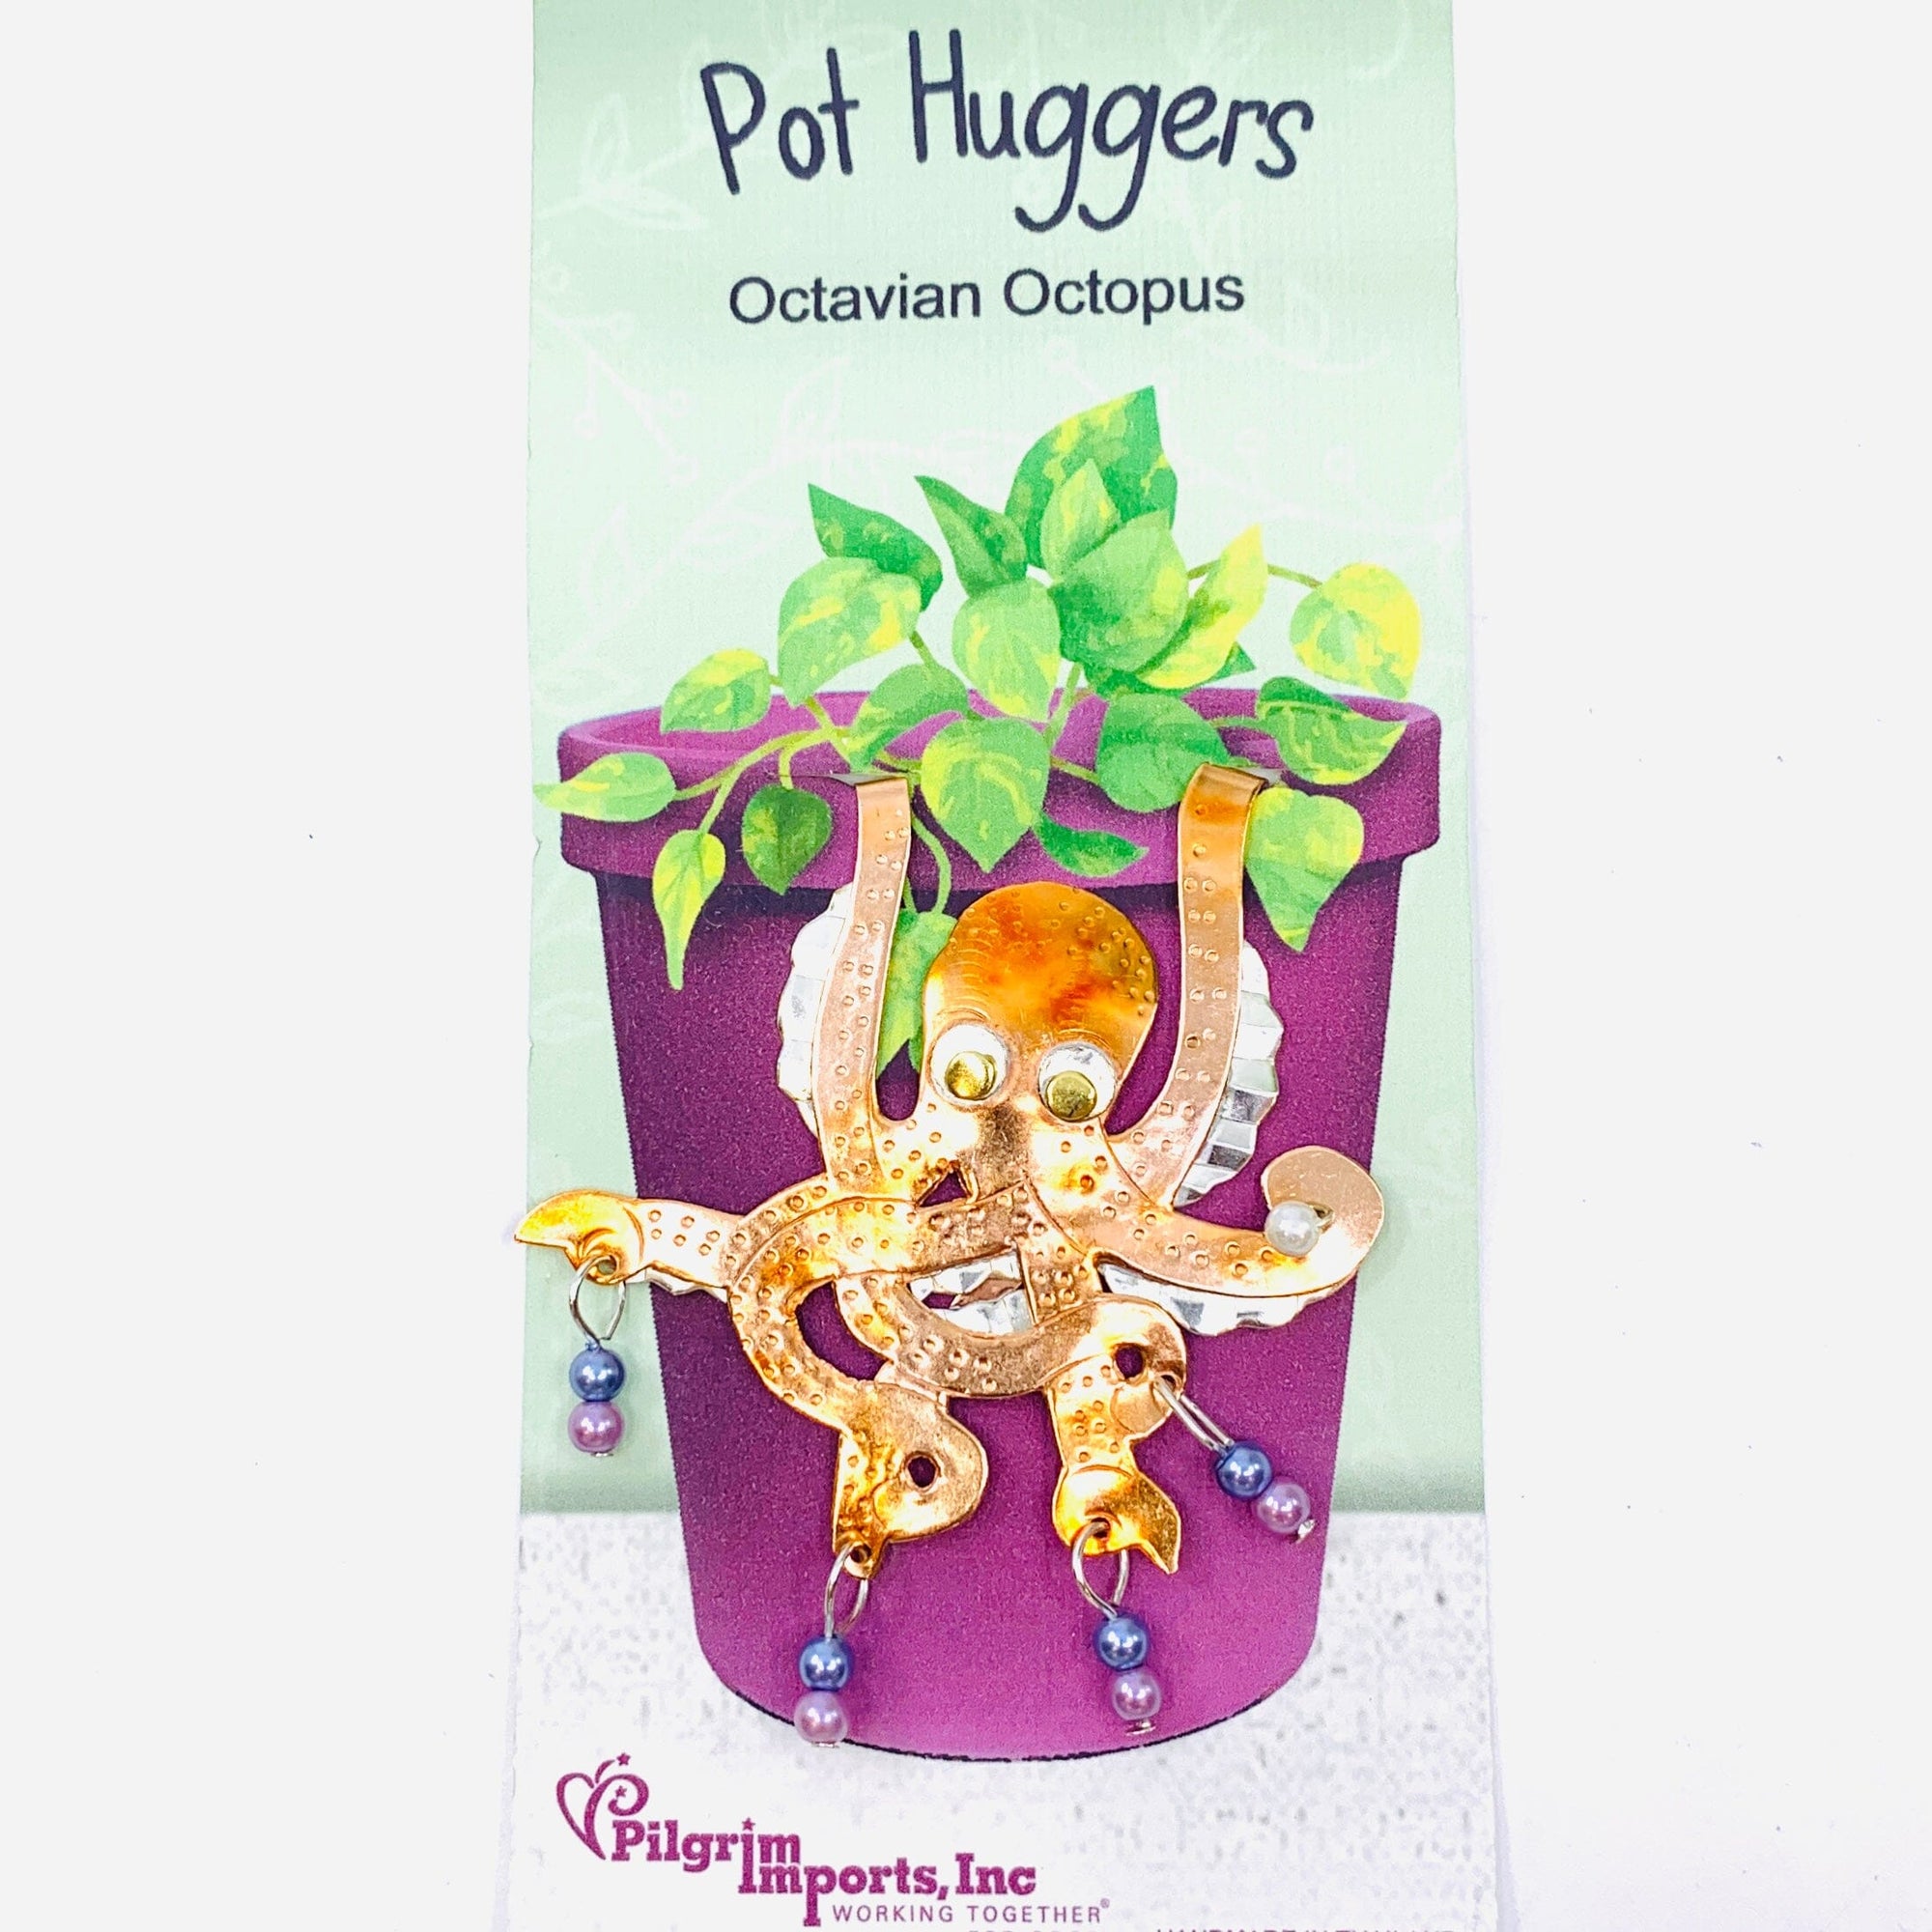 Pot Huggers 27, Octavian Octopus Miniature Pilgrim Imports 